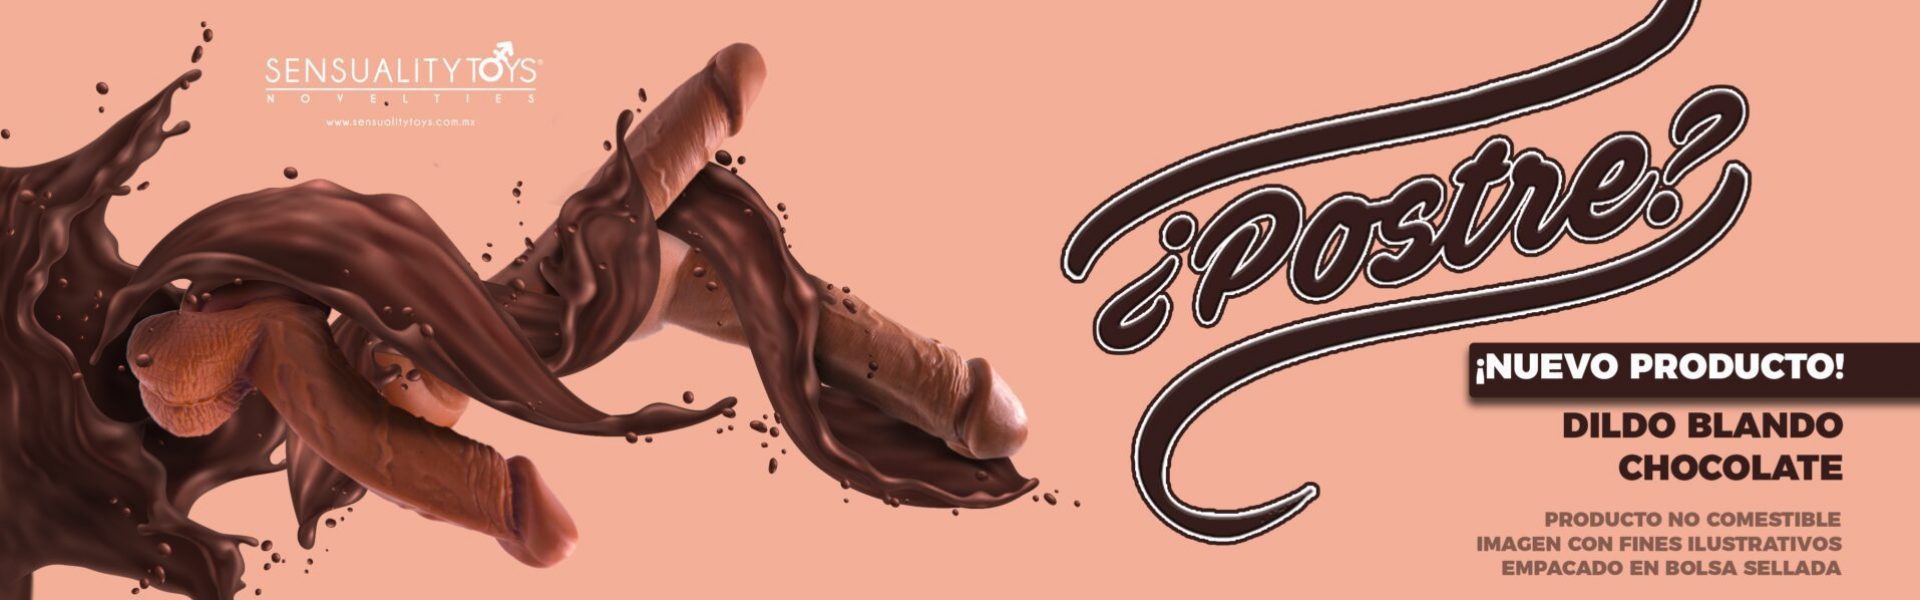 banner Chocolate